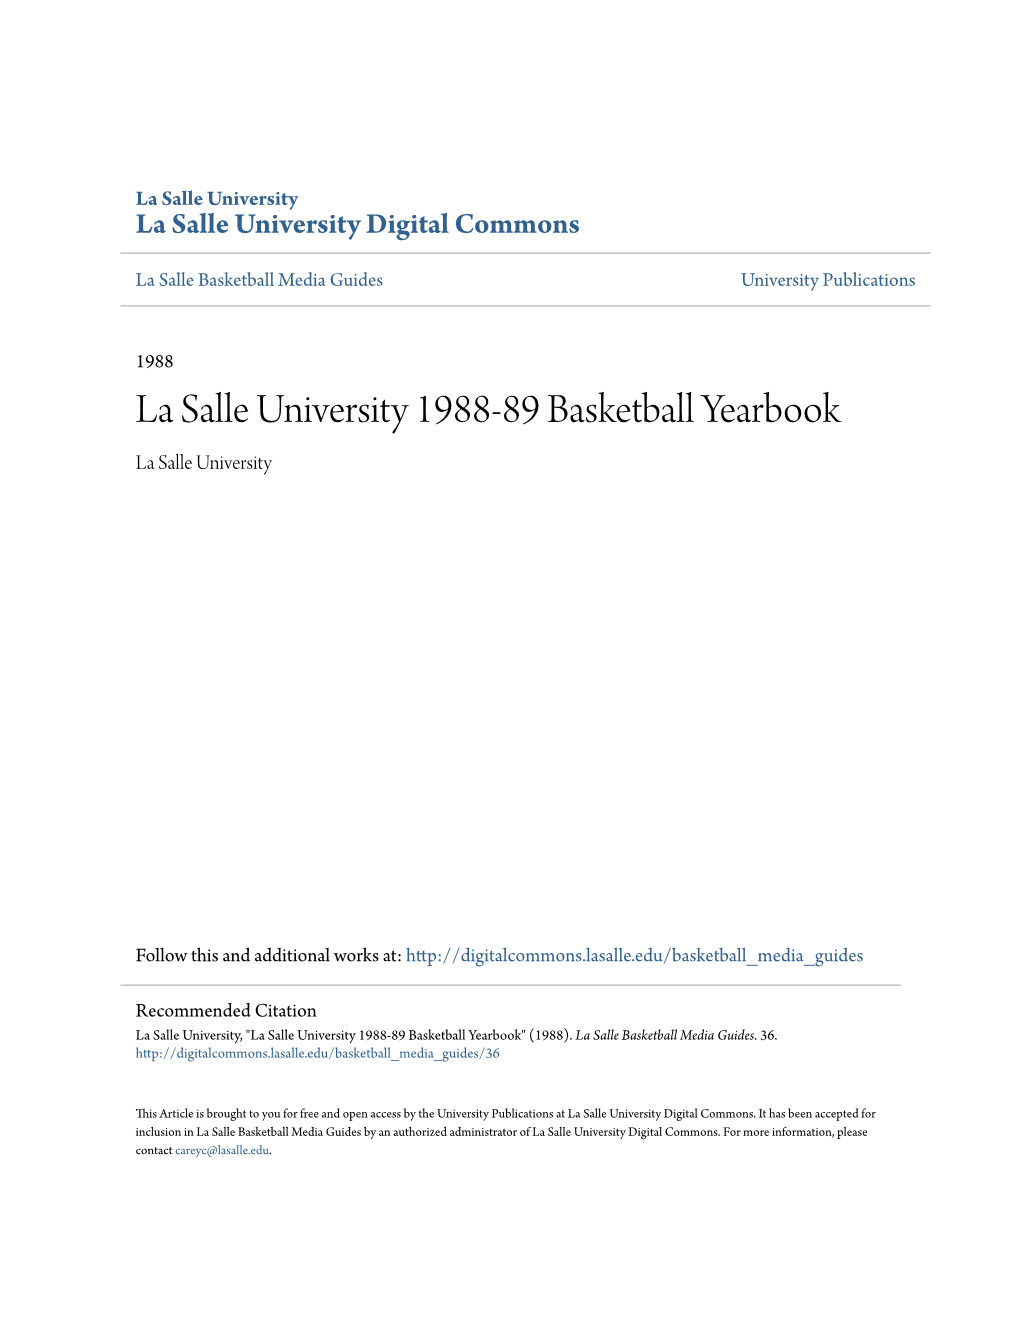 La Salle University 1988-89 Basketball Yearbook La Salle University